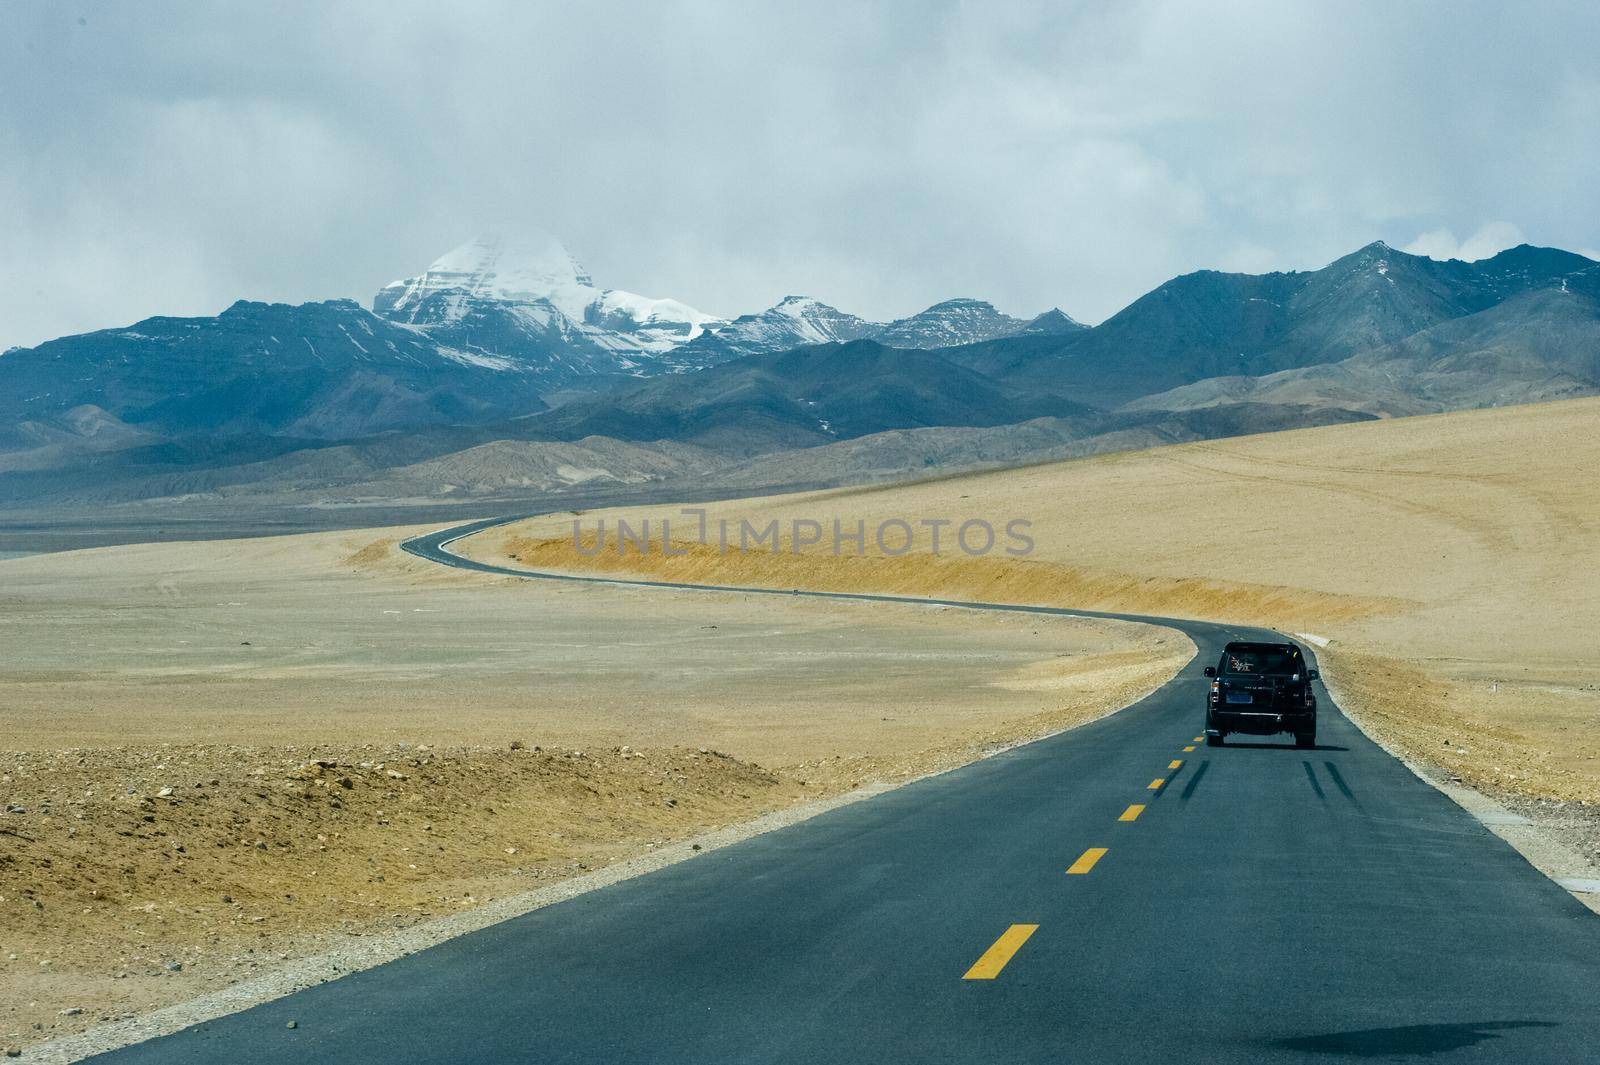 Naku, Nepal - June 23, 2016: Asphalt road in Tibet. The track in the Himalayas.